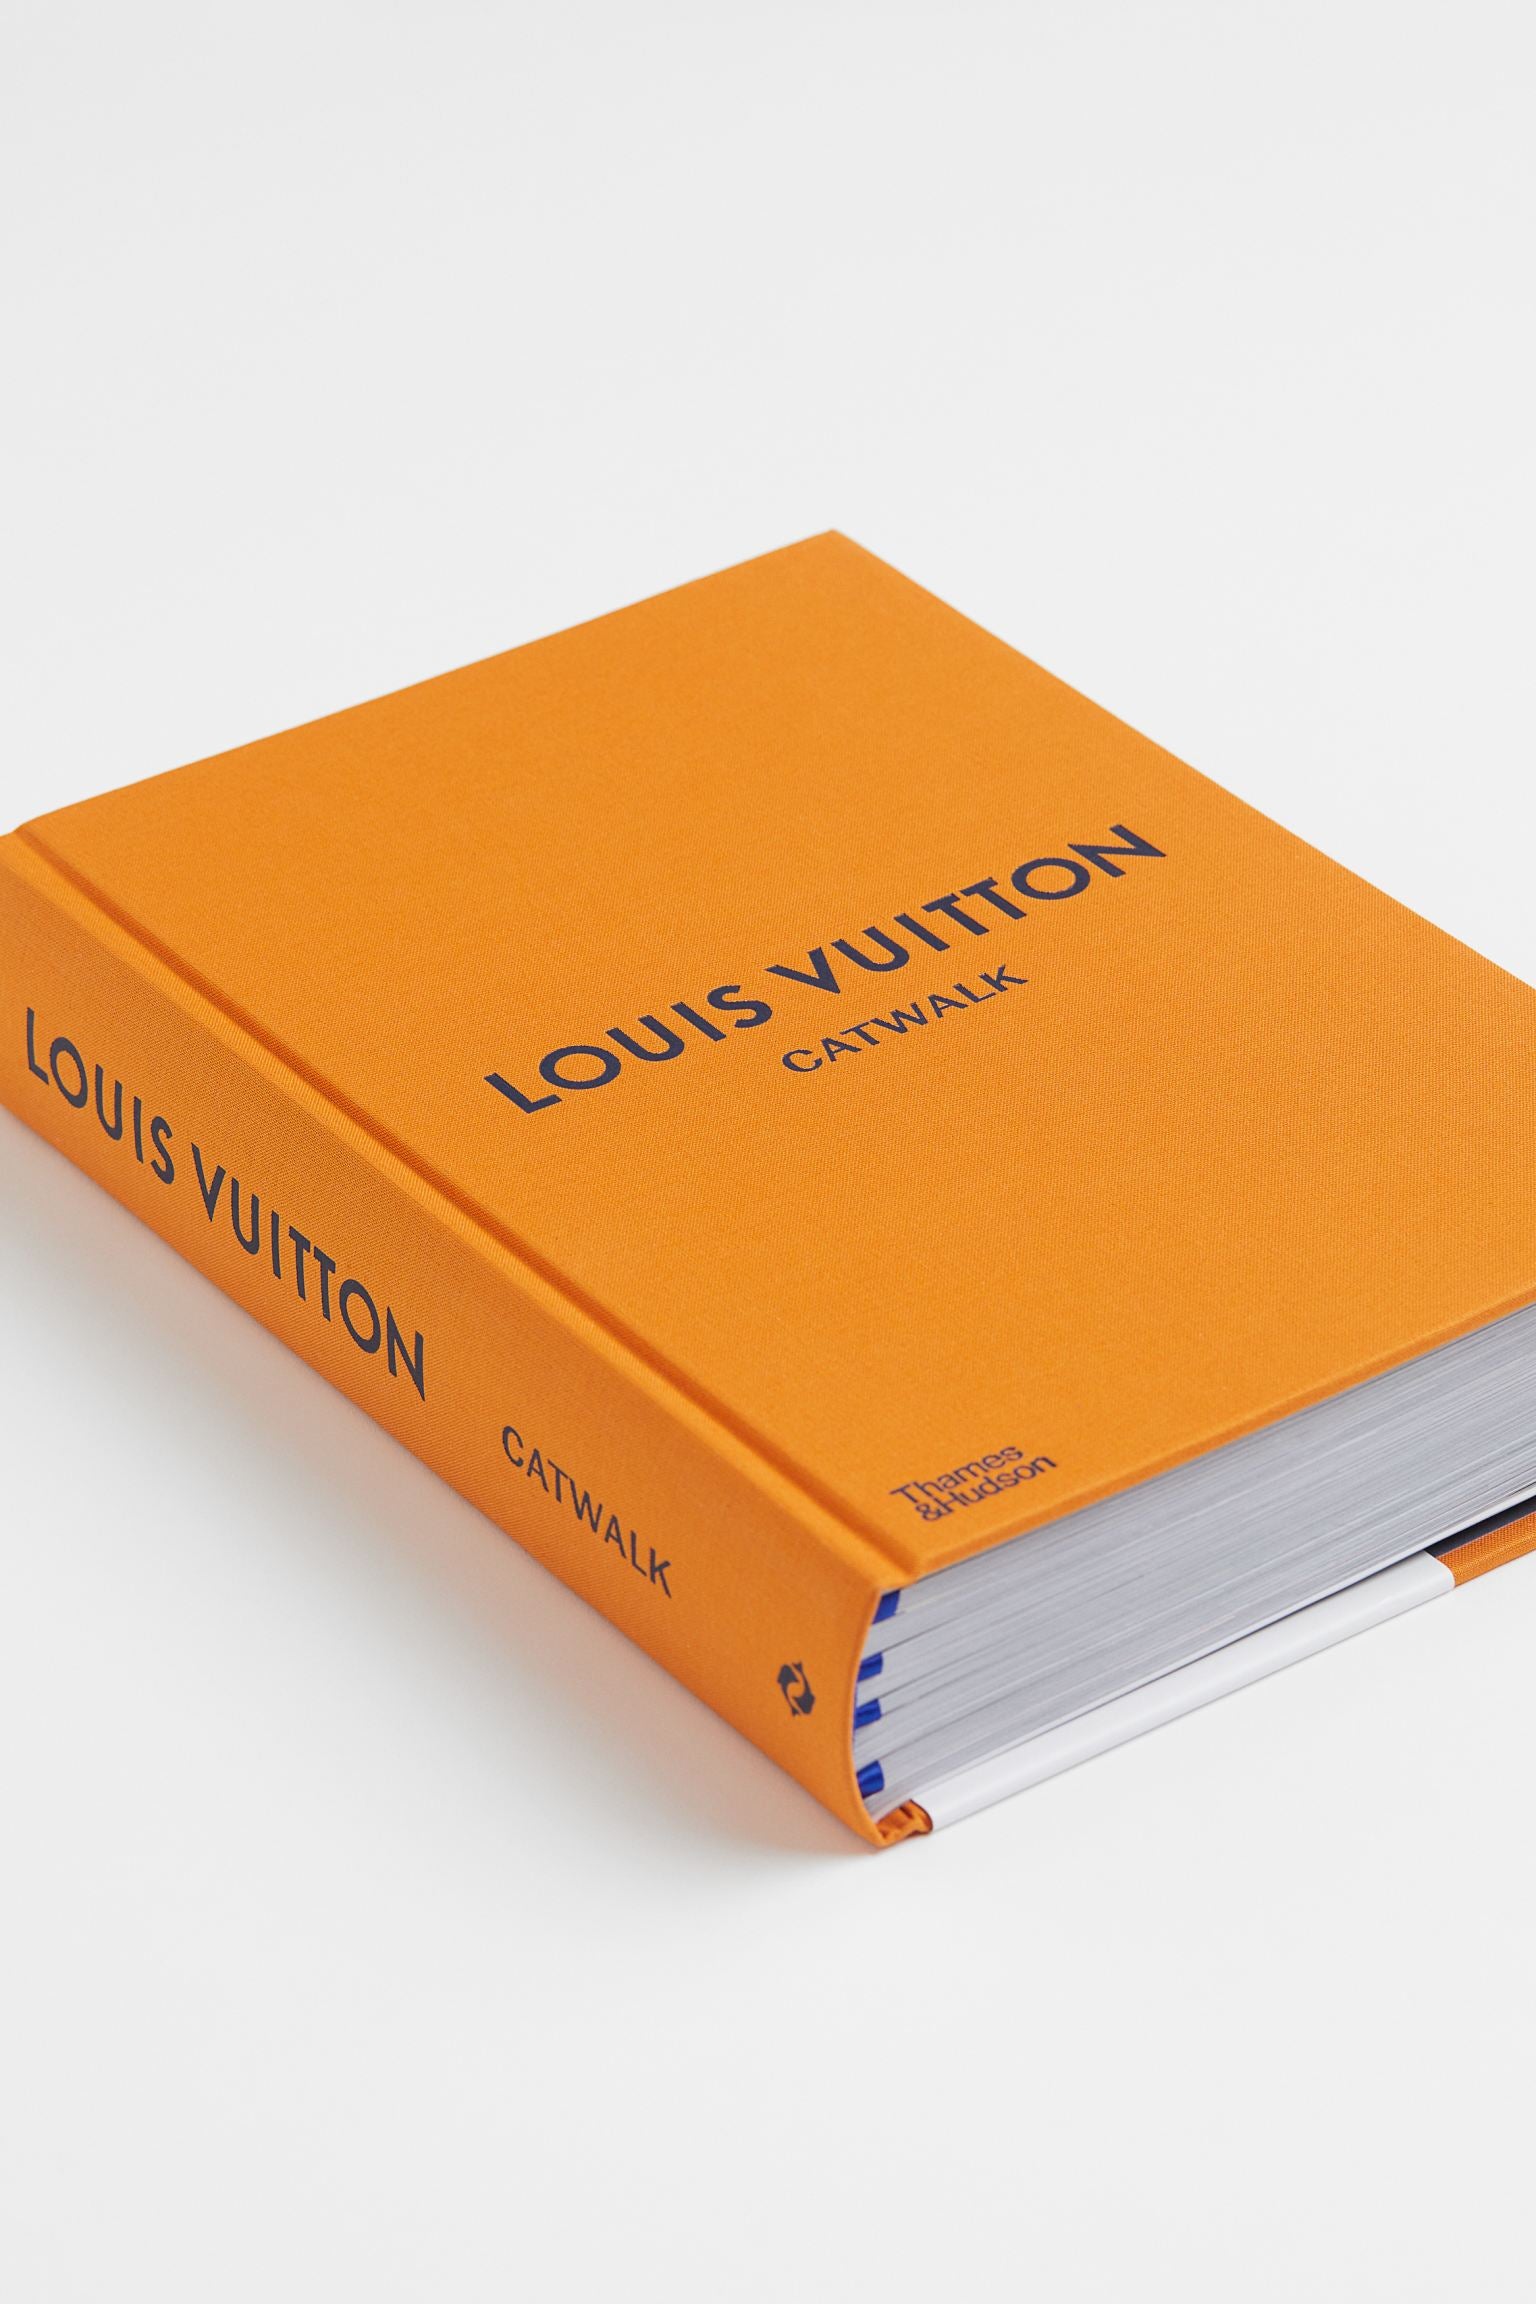 Louis Vuitton Catwalk – homestic